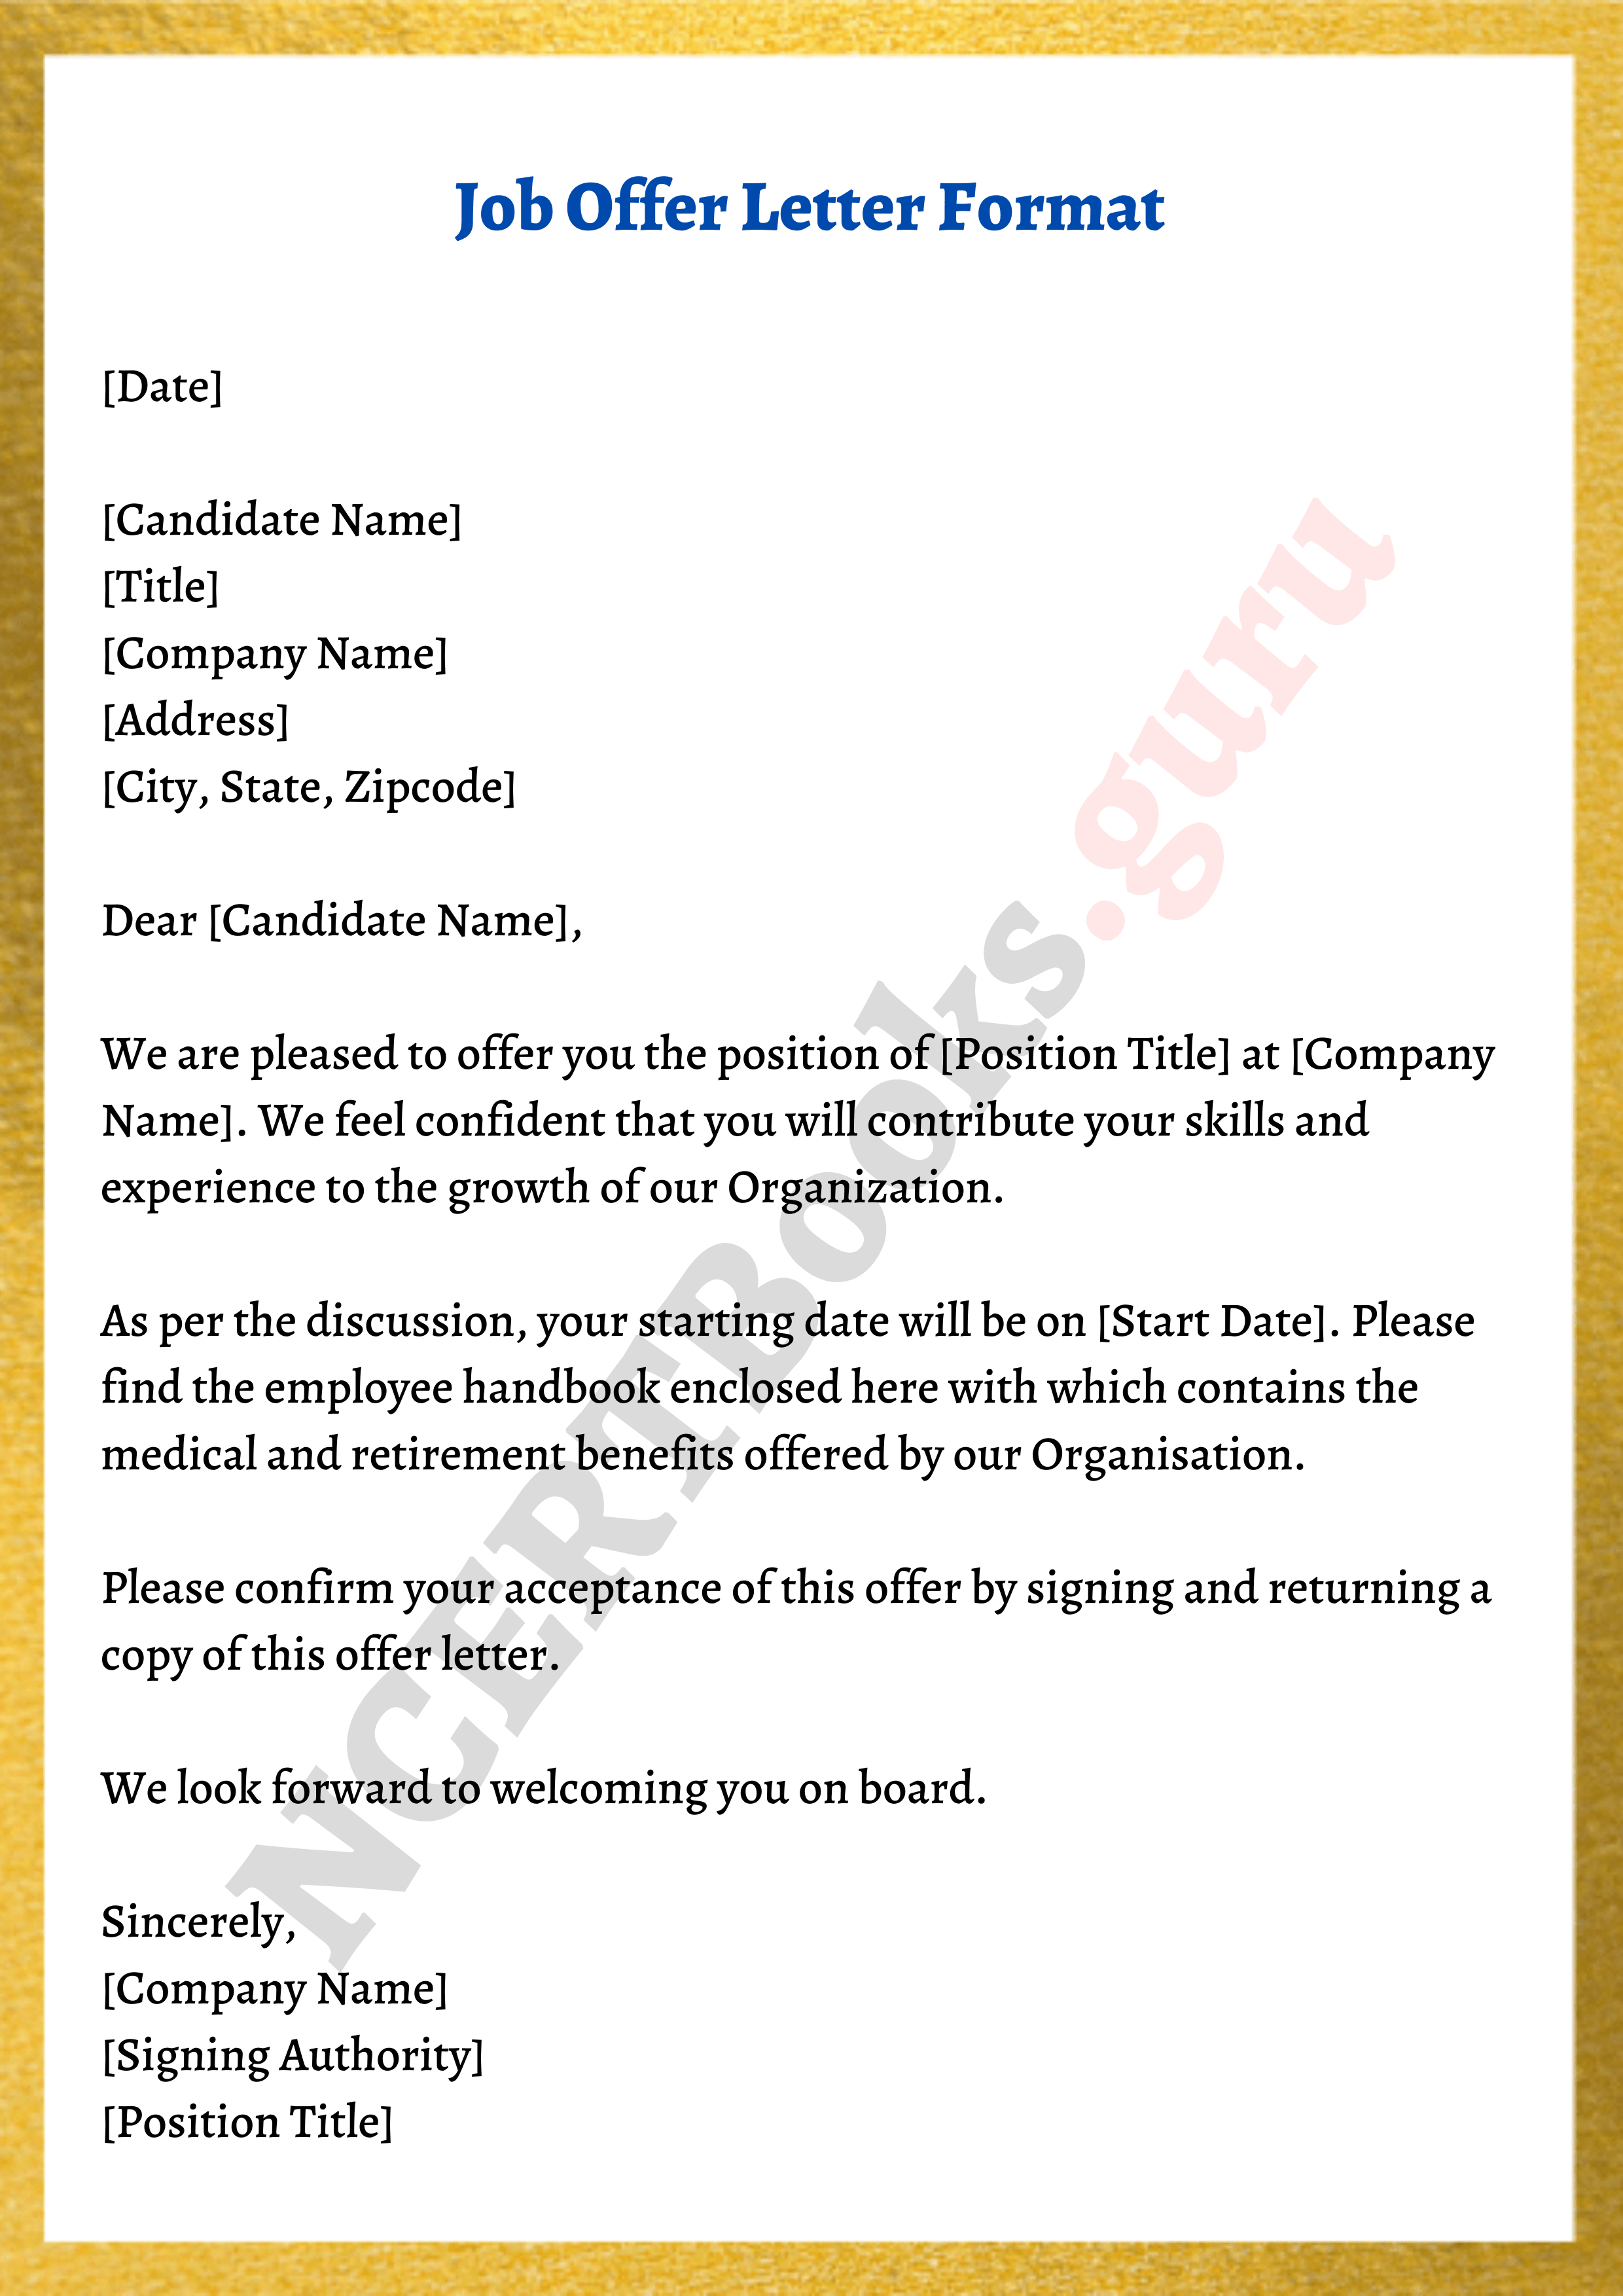 Job Offer Letter Format 